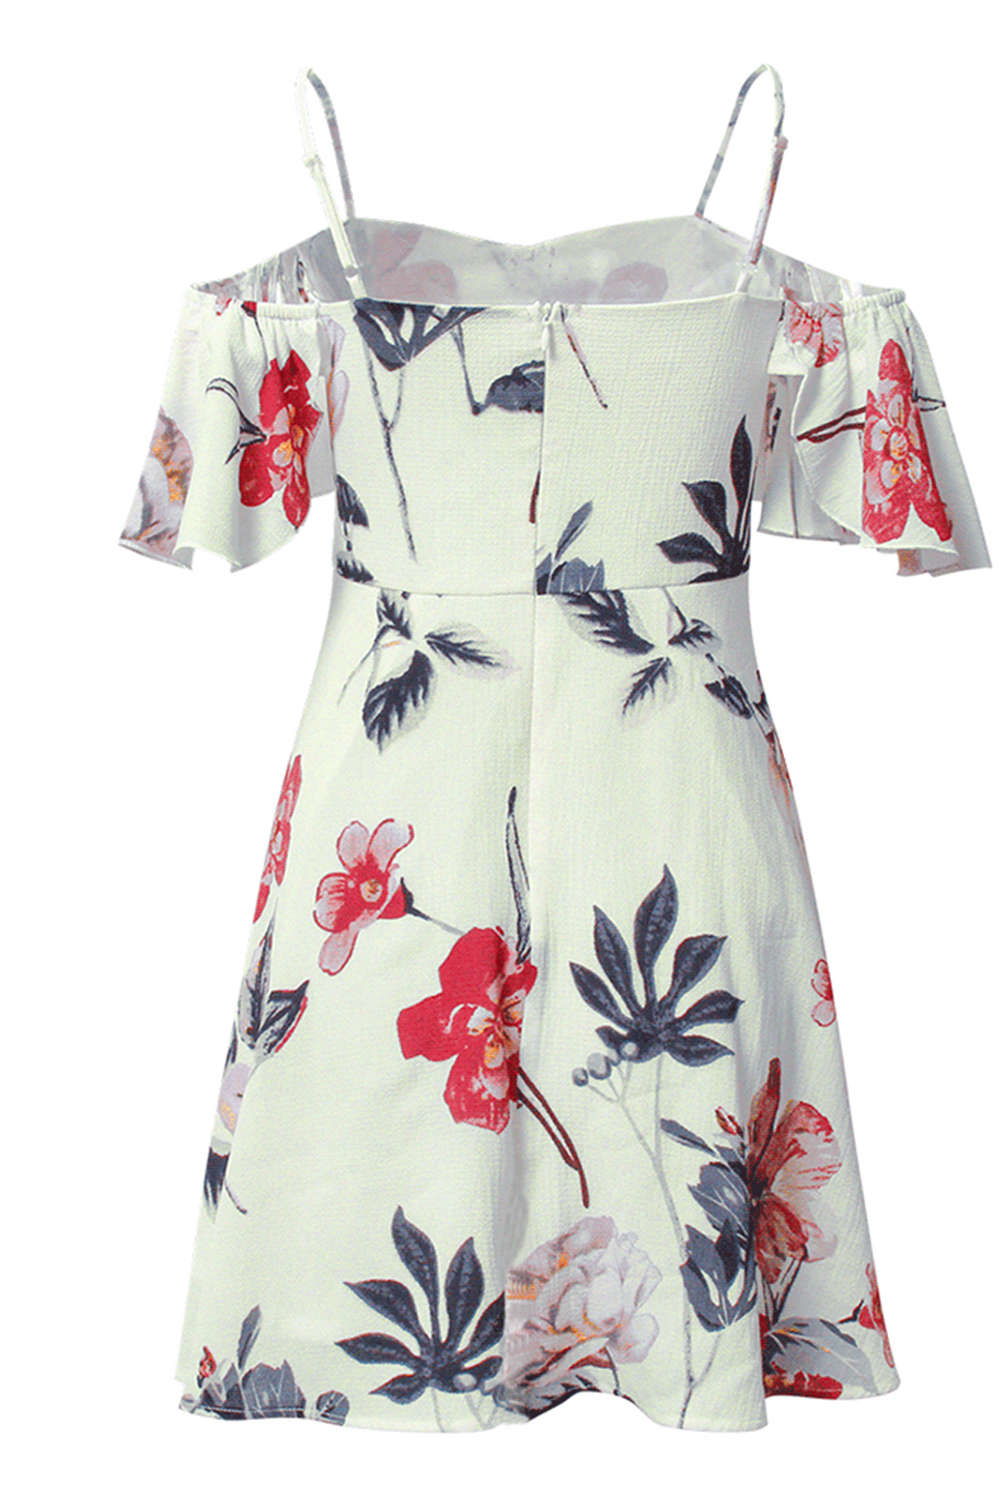 Iyasson Women Ruffle Floral Print Off- shoulder Holiday Beach Dress